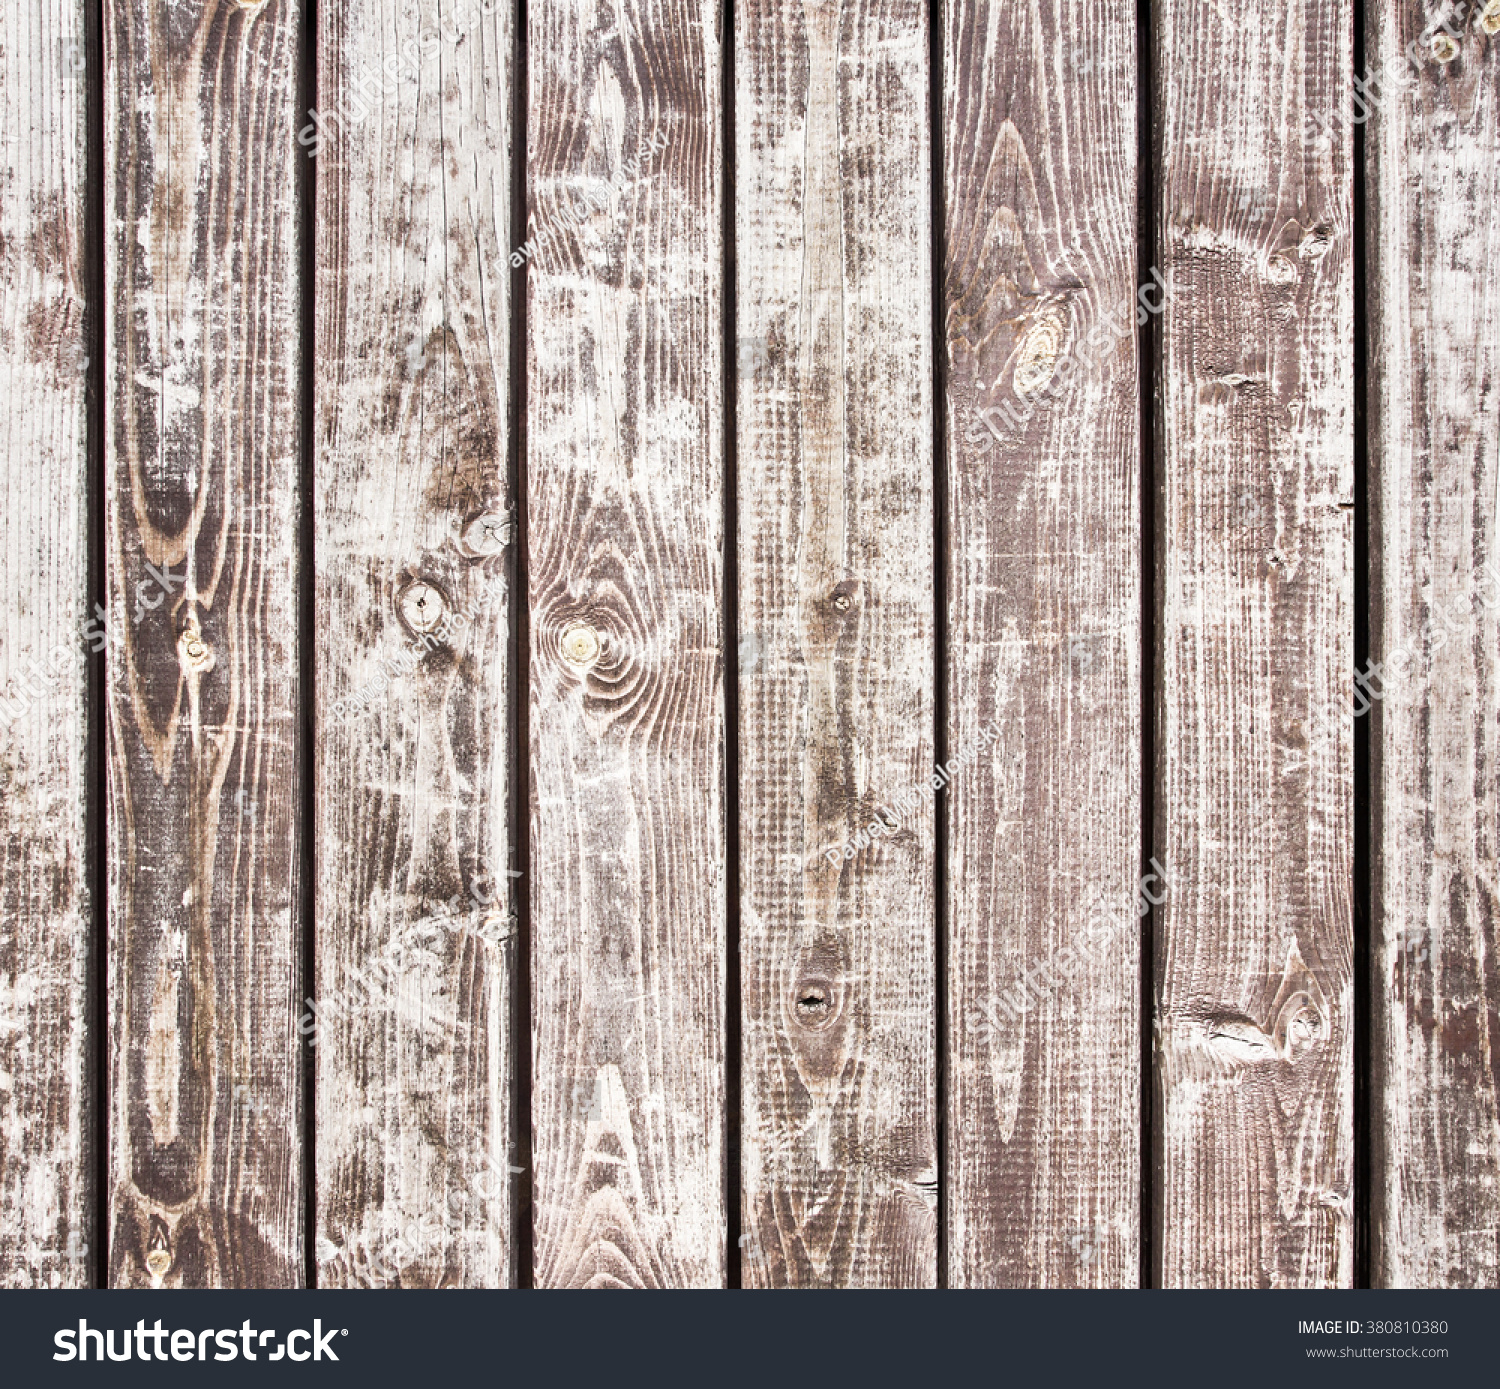 Grunge Old Weathered Wood Surface Stock Photo (Royalty Free ...